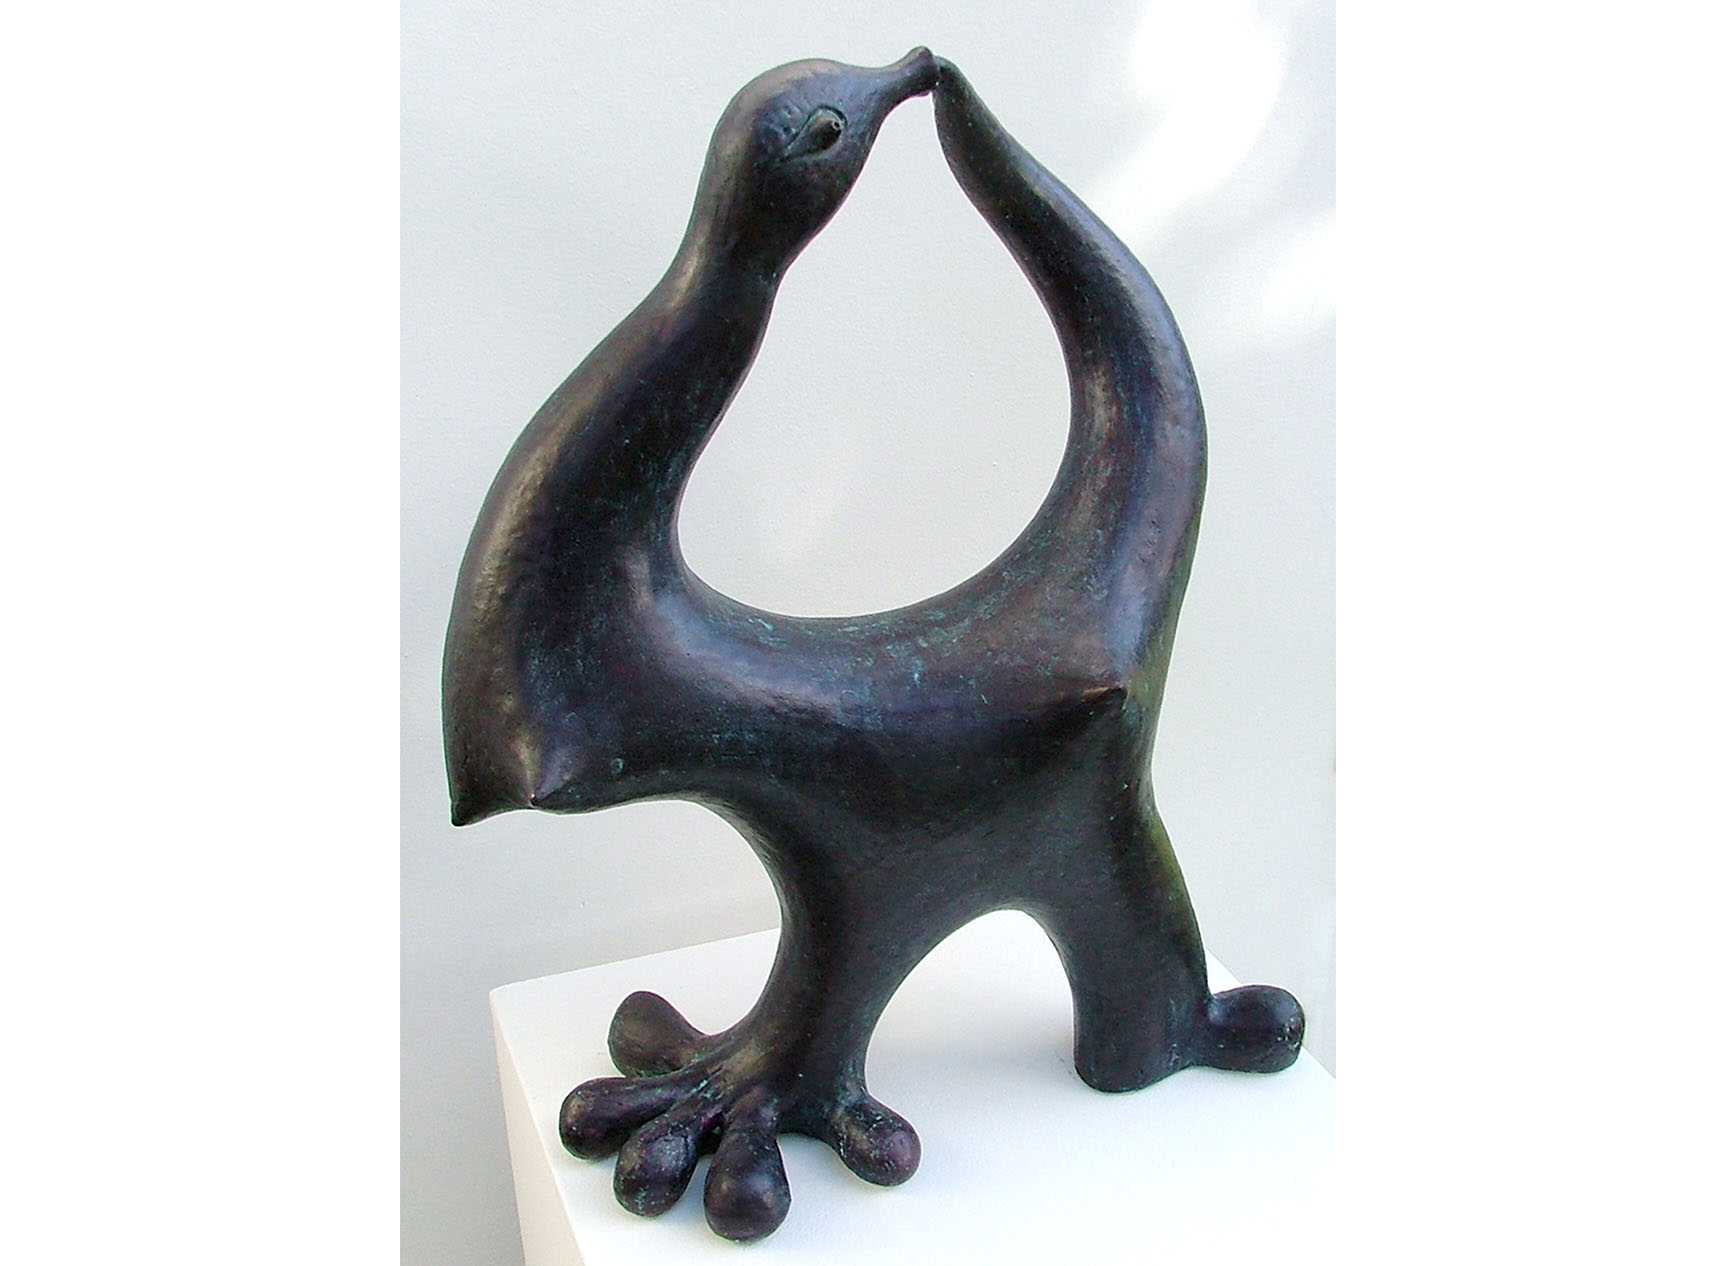 Ceramic sculpture with bird head and big foot